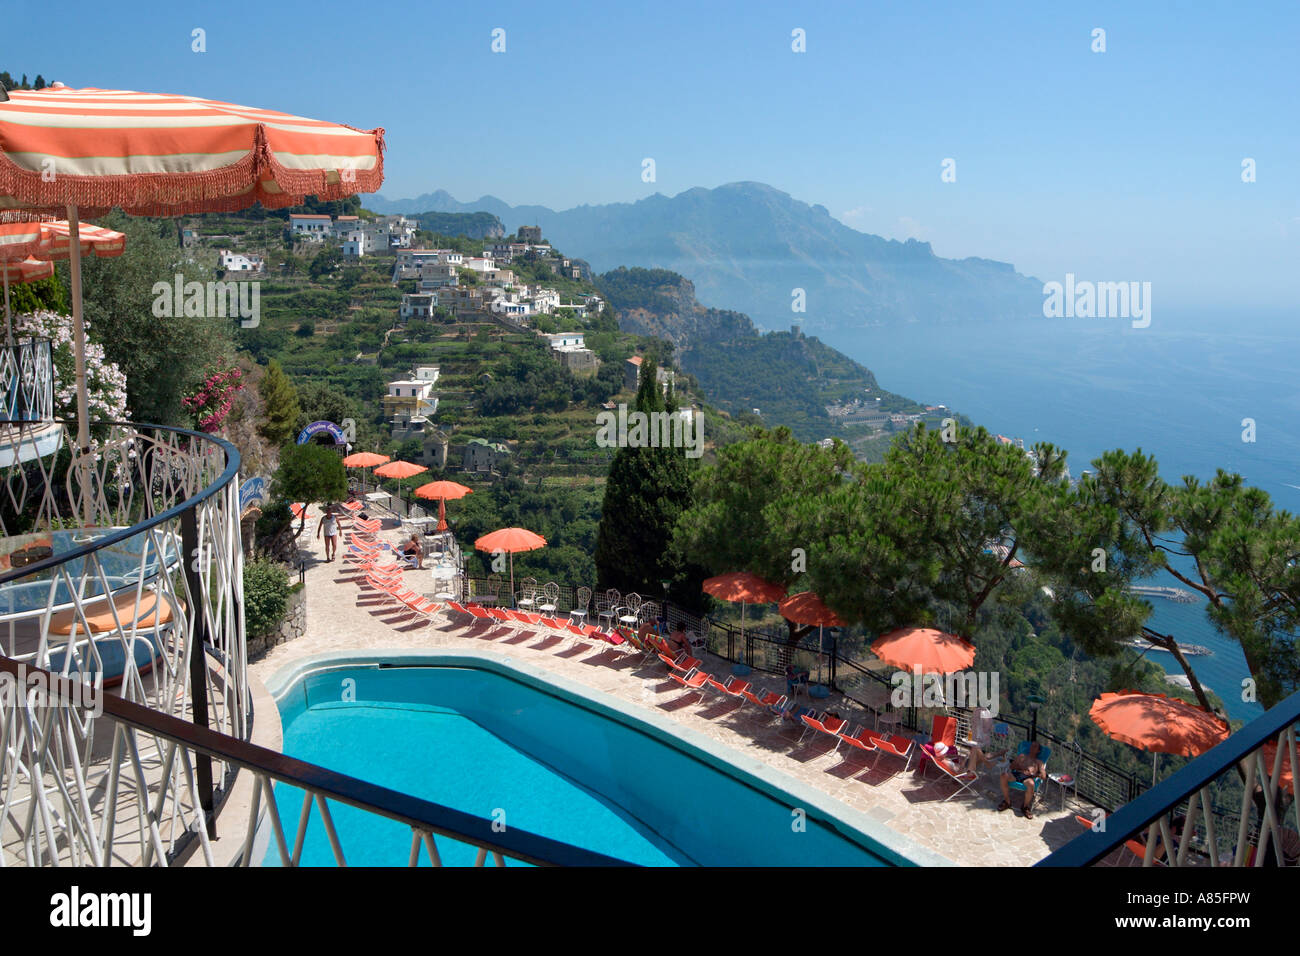 View over swimming pool towards Amalfi, Hotel Excelsior, Amalfi, Neapolitan Riviera, Italy Stock Photo